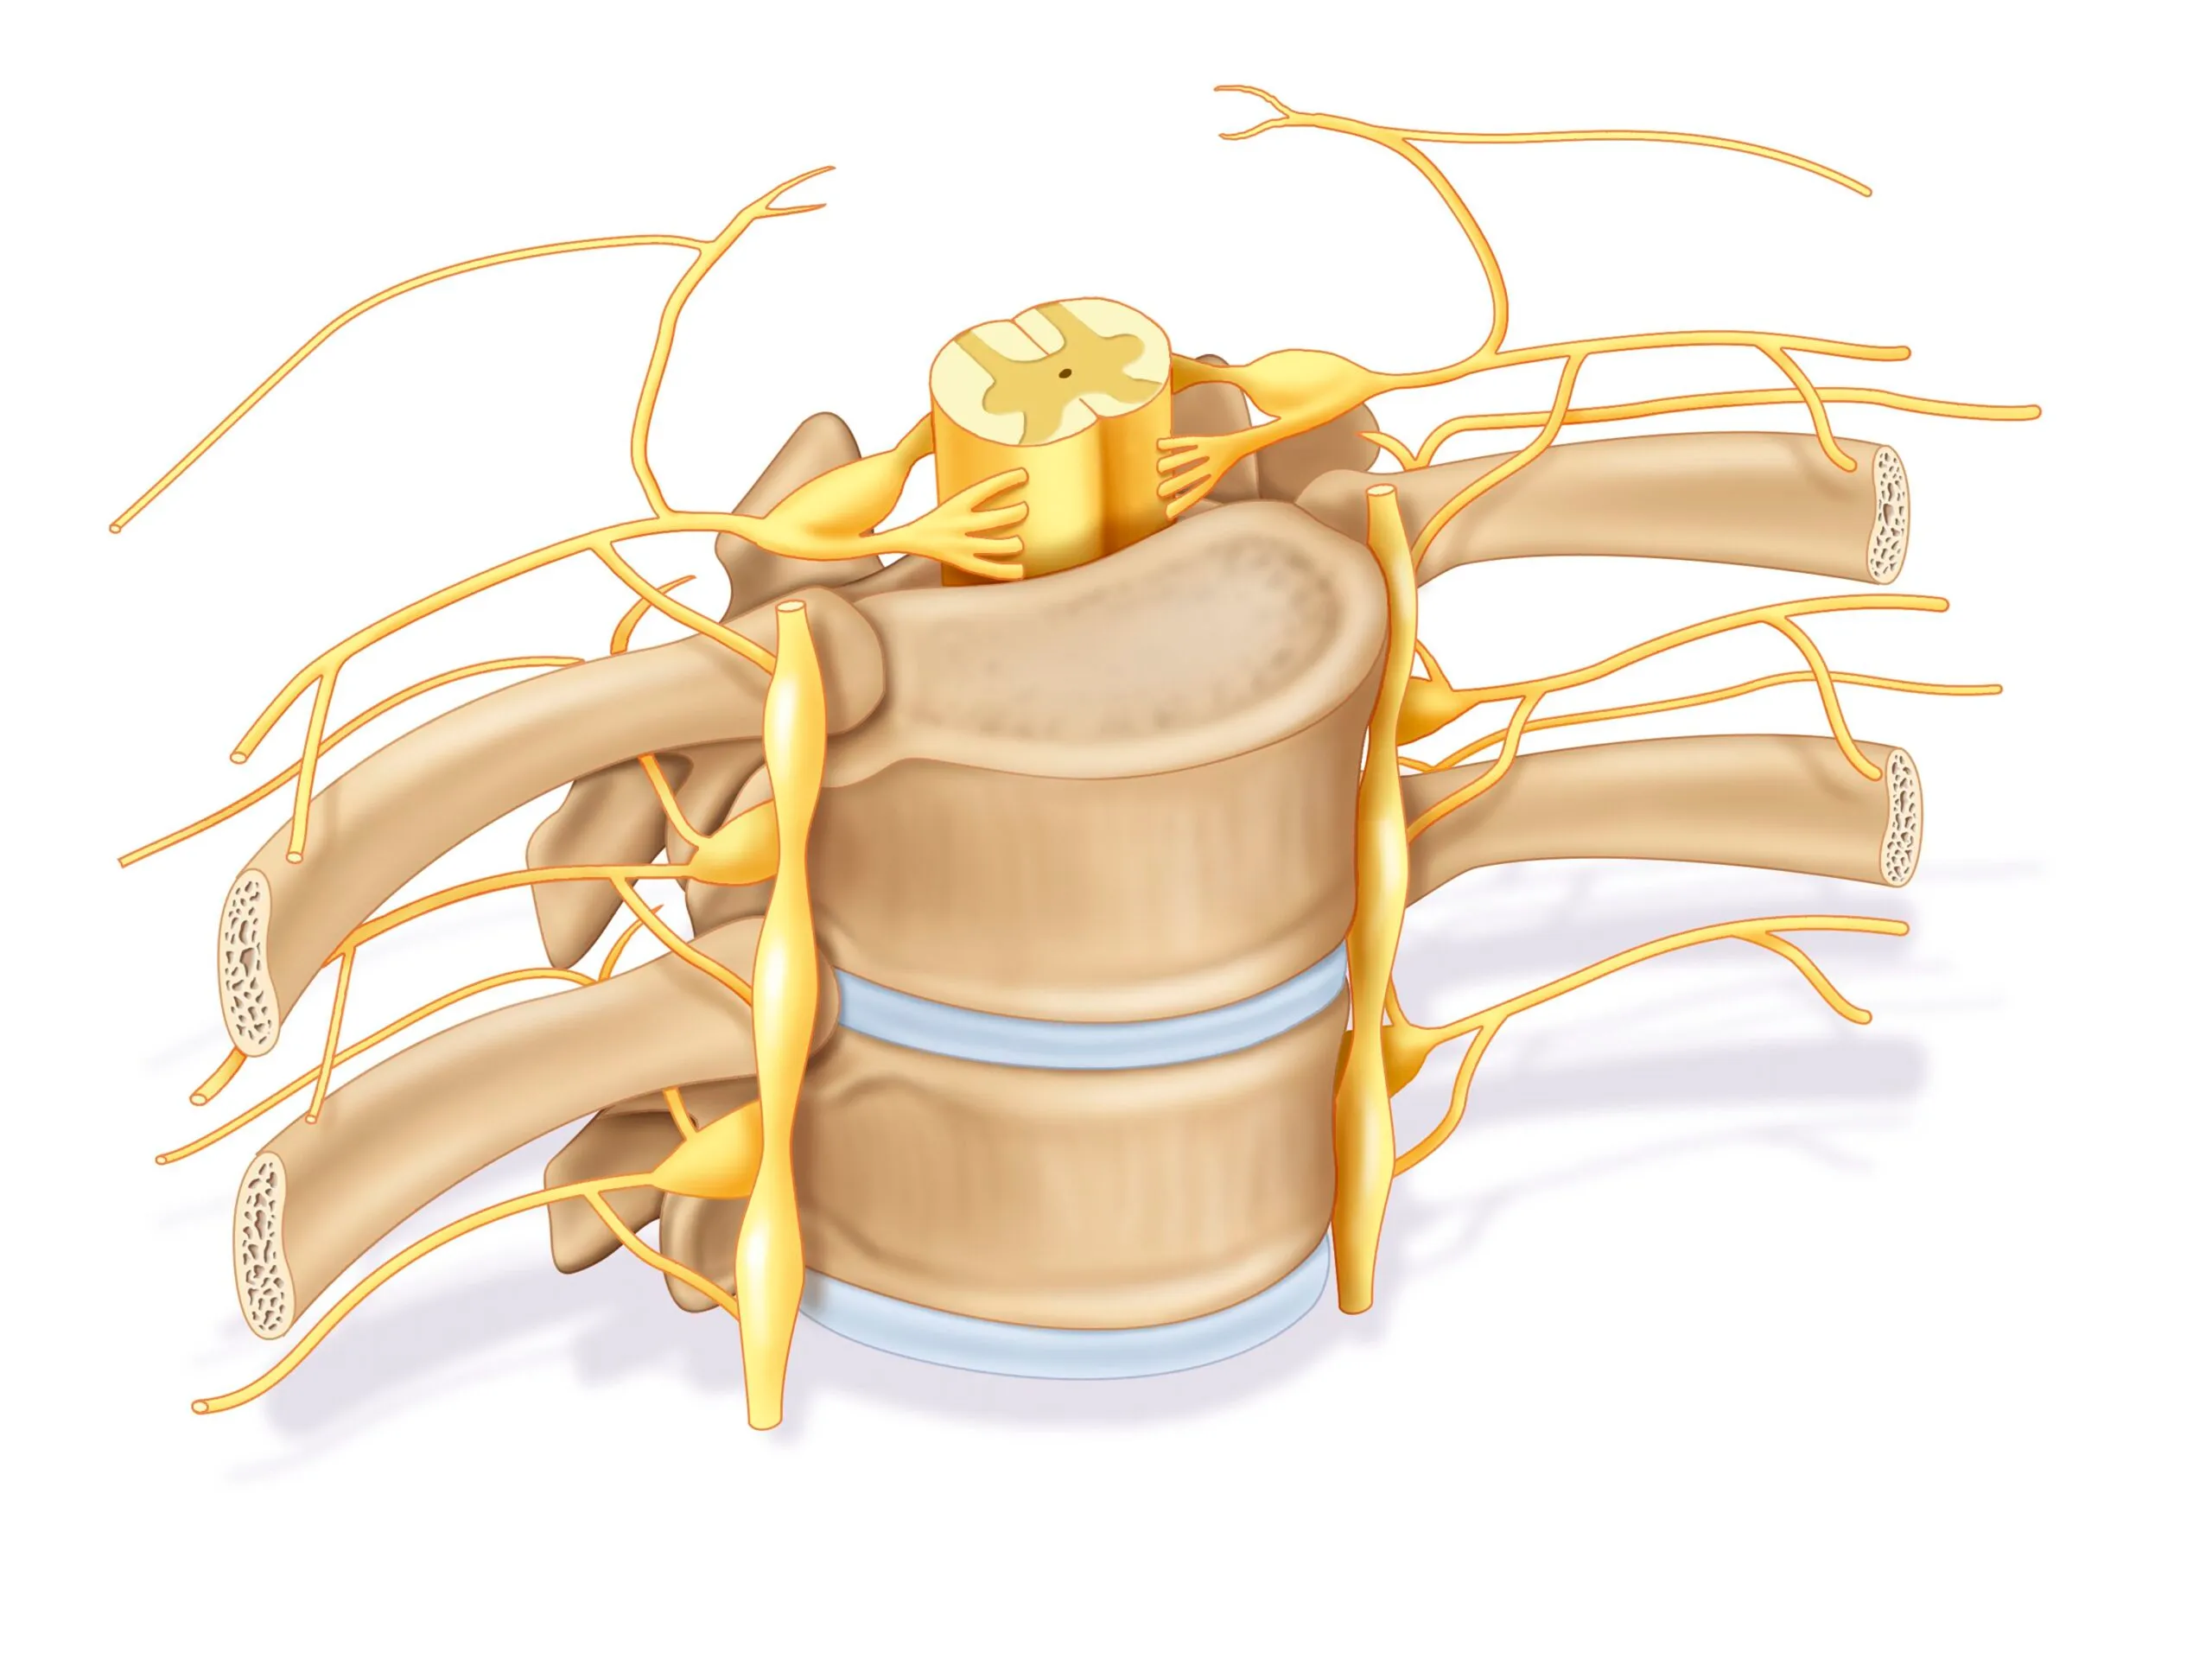 Il nervo seno-vertebrale di Luschka